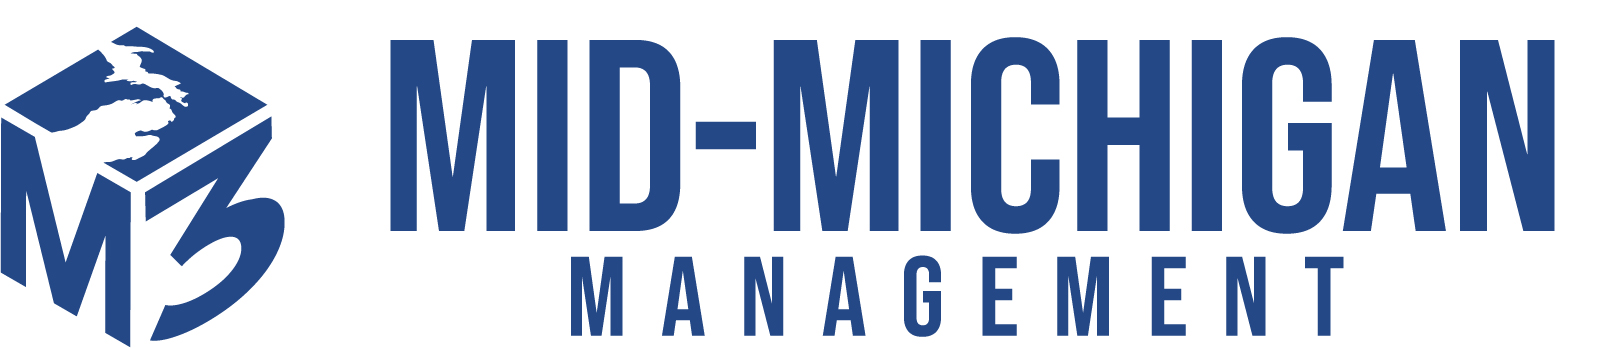 Mid-Michigan Management